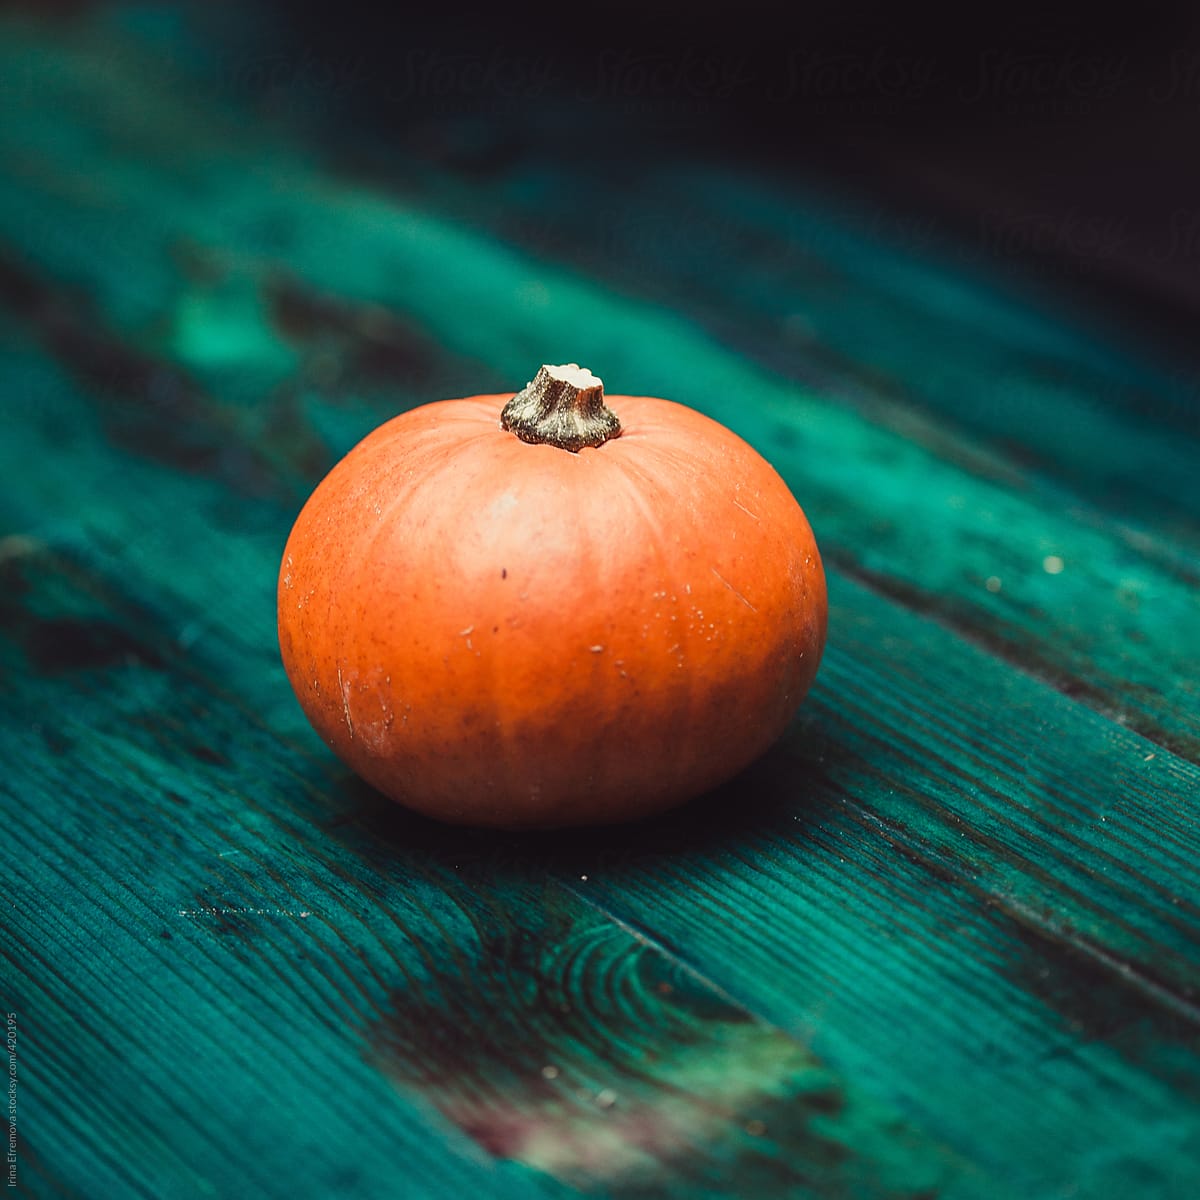 Small orange pumpkin on a dark turquoise table #2